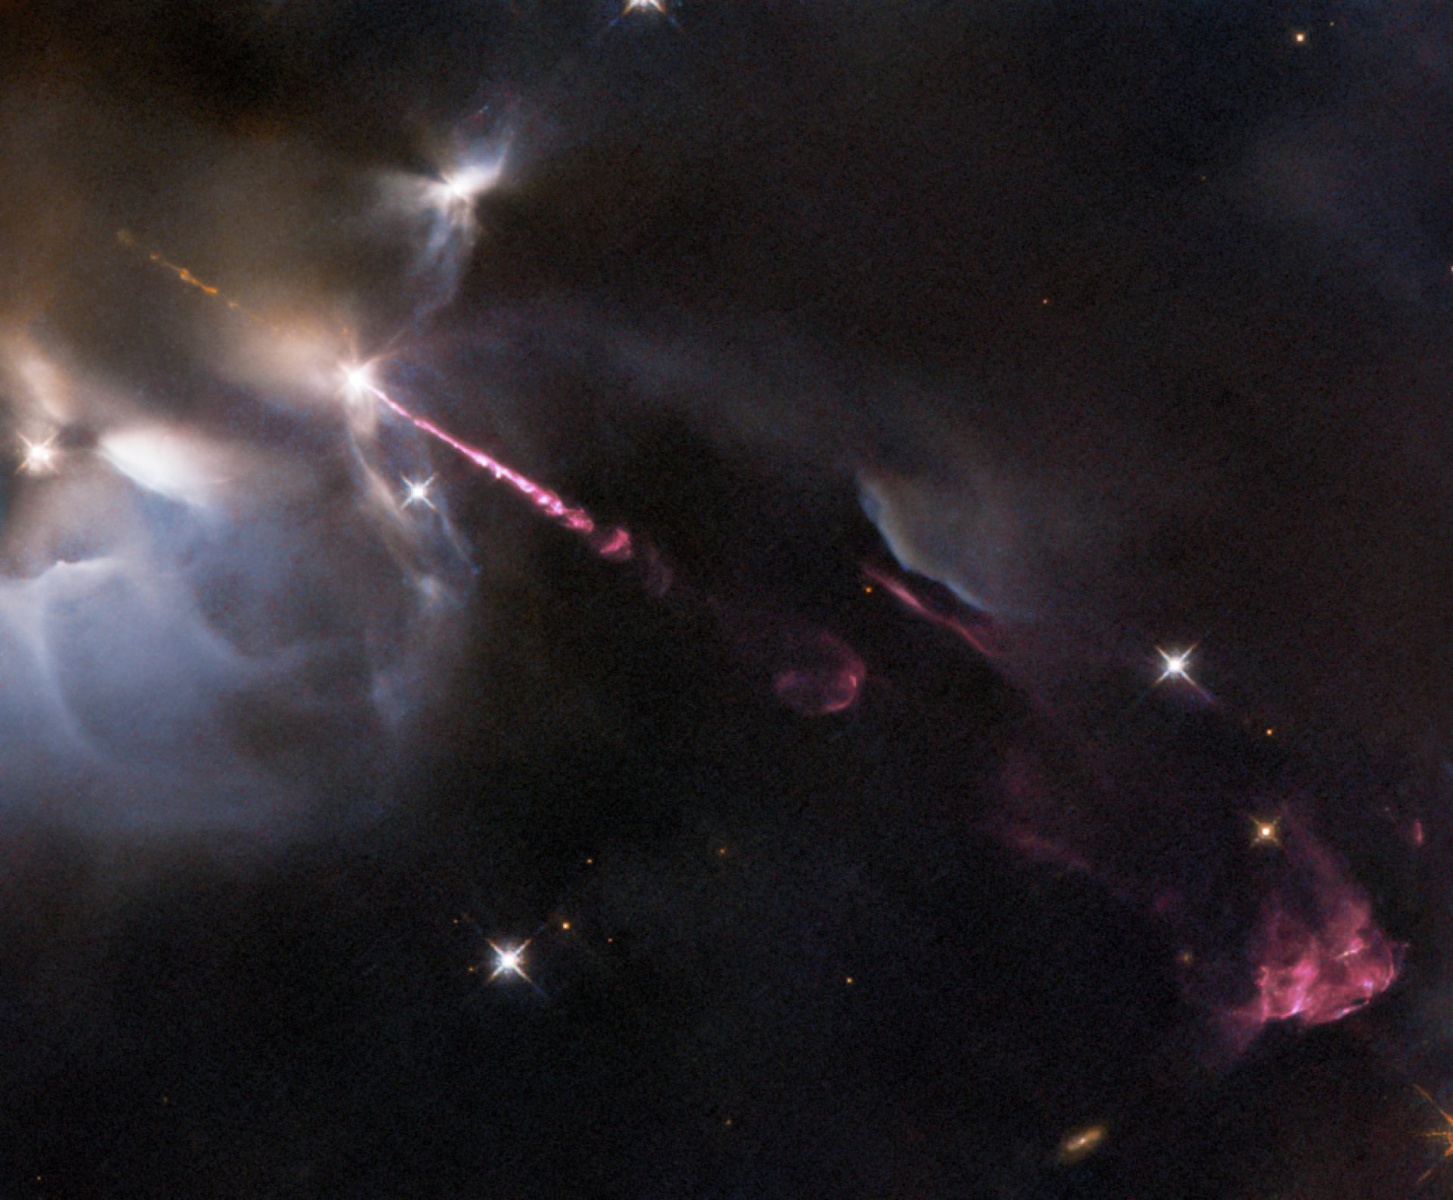 Hubble Views an Infant Star’s Outburst